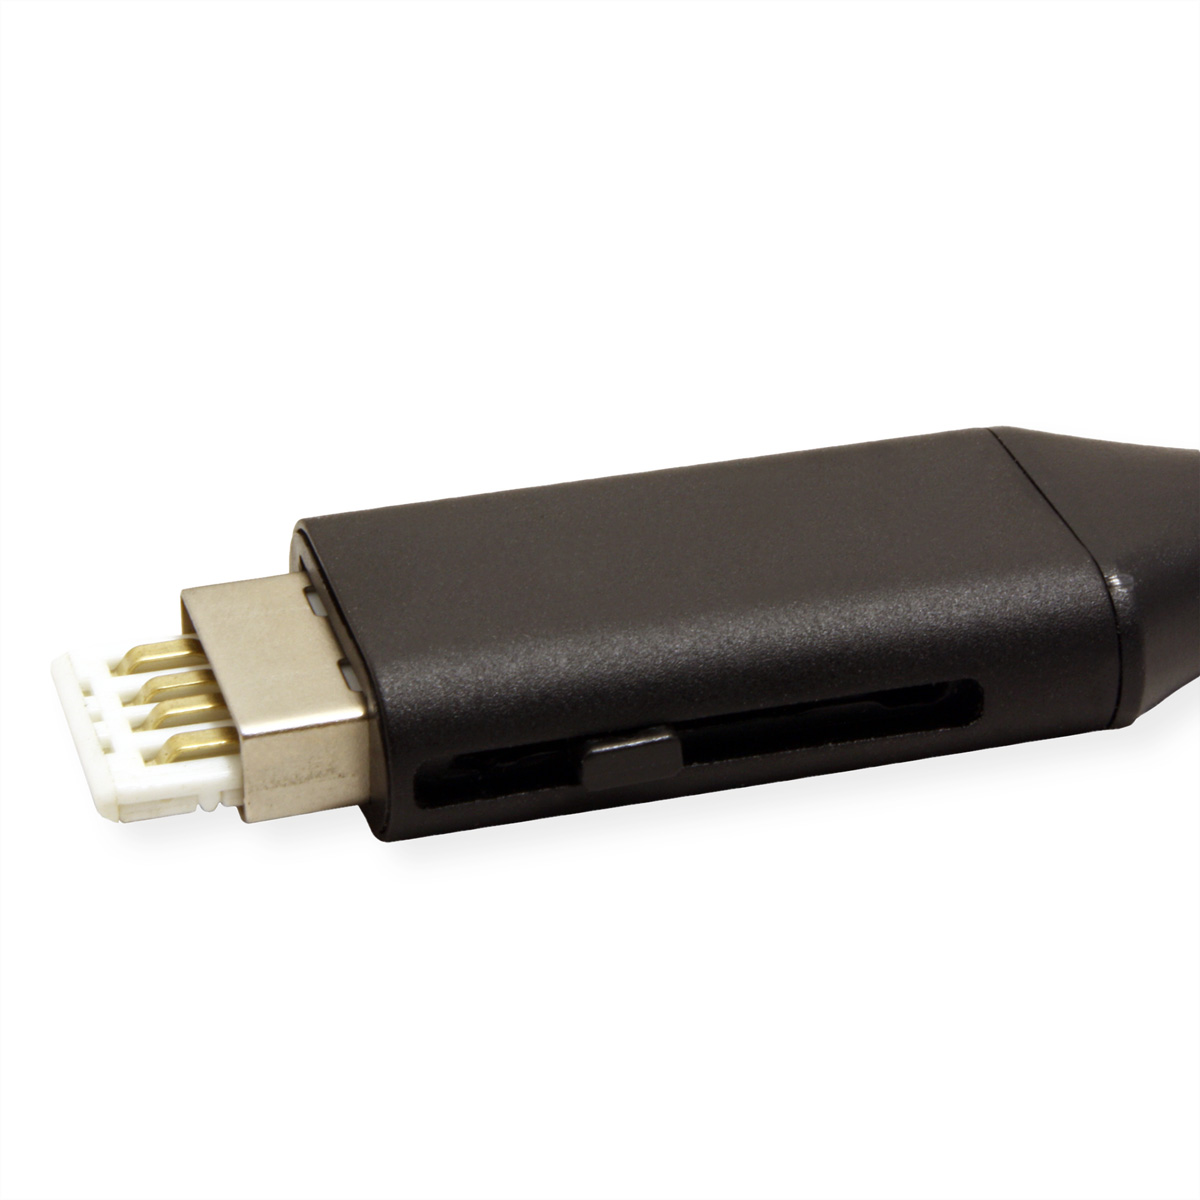 Typ USB Typ Sync- A 2.0 (ST/BU) / - ROLINE & C OTG 2.0 Micro B, Ladekabel Kabel USB